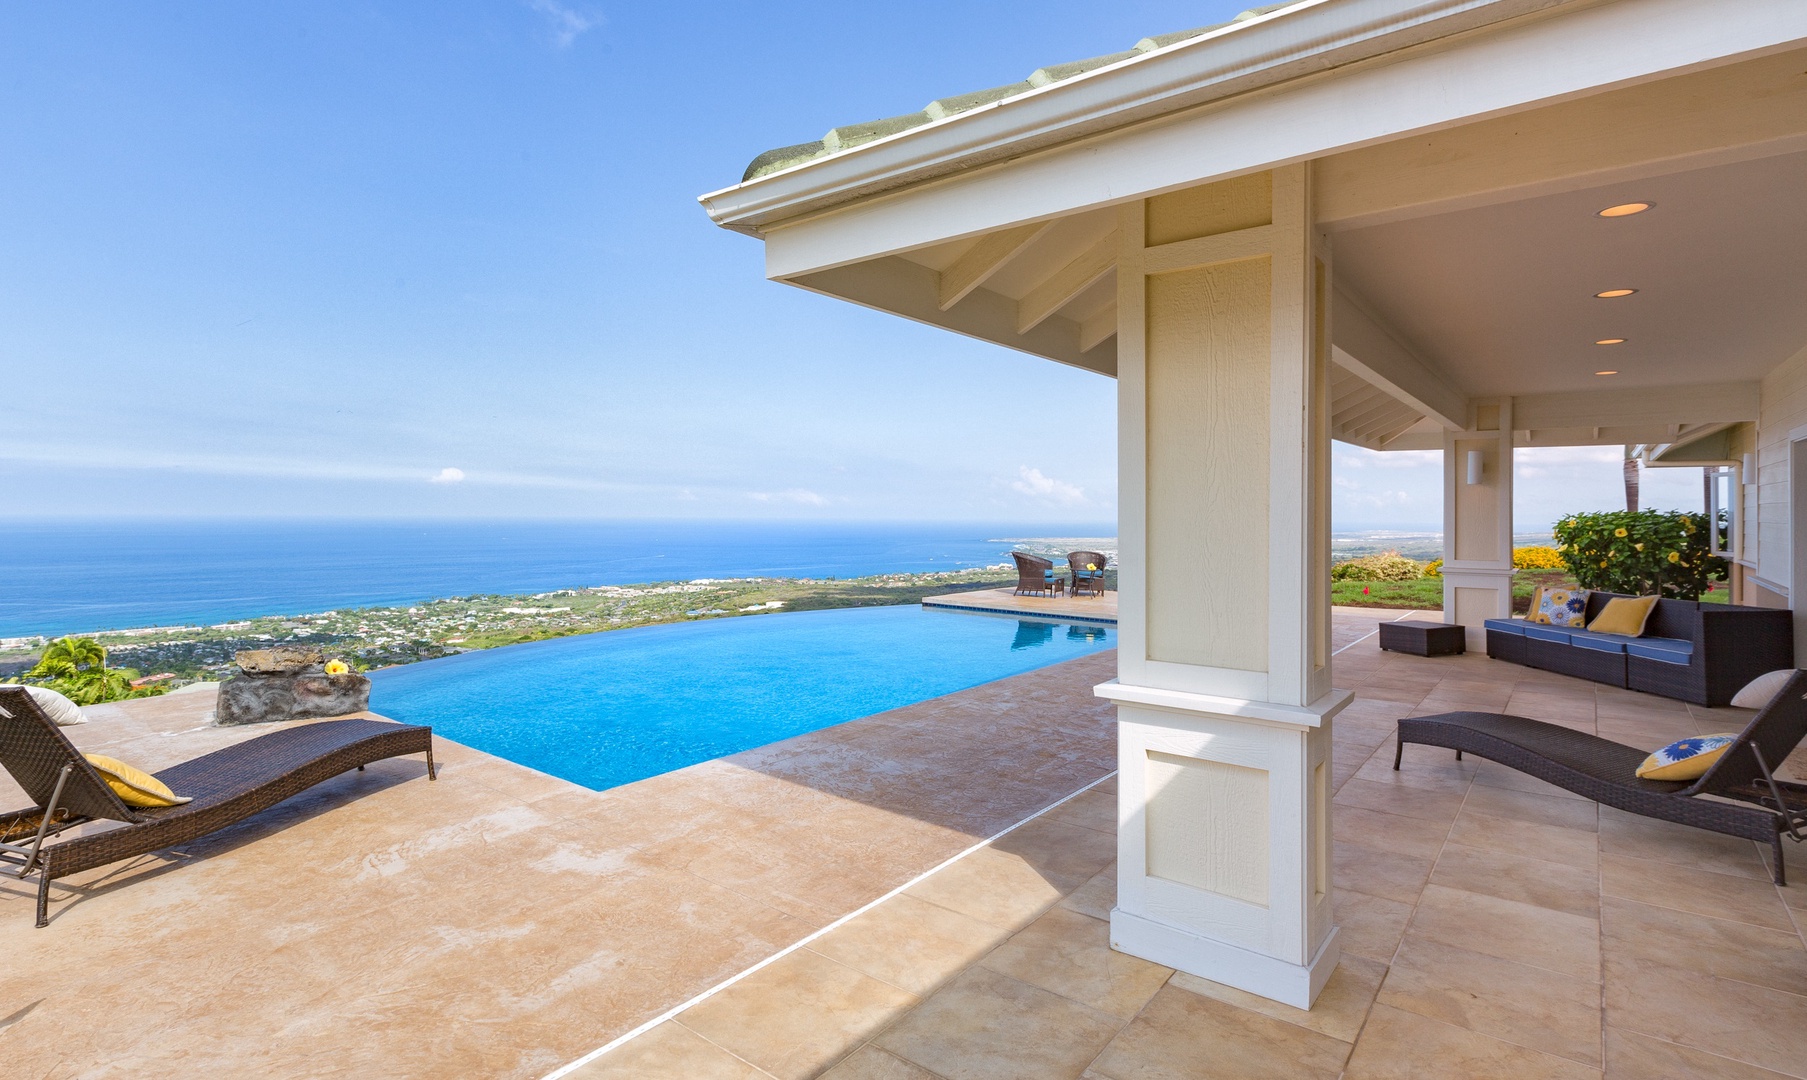 Kailua Kona Vacation Rentals, Hale Maluhia (Big Island) - Ocean views from the private infinity pool